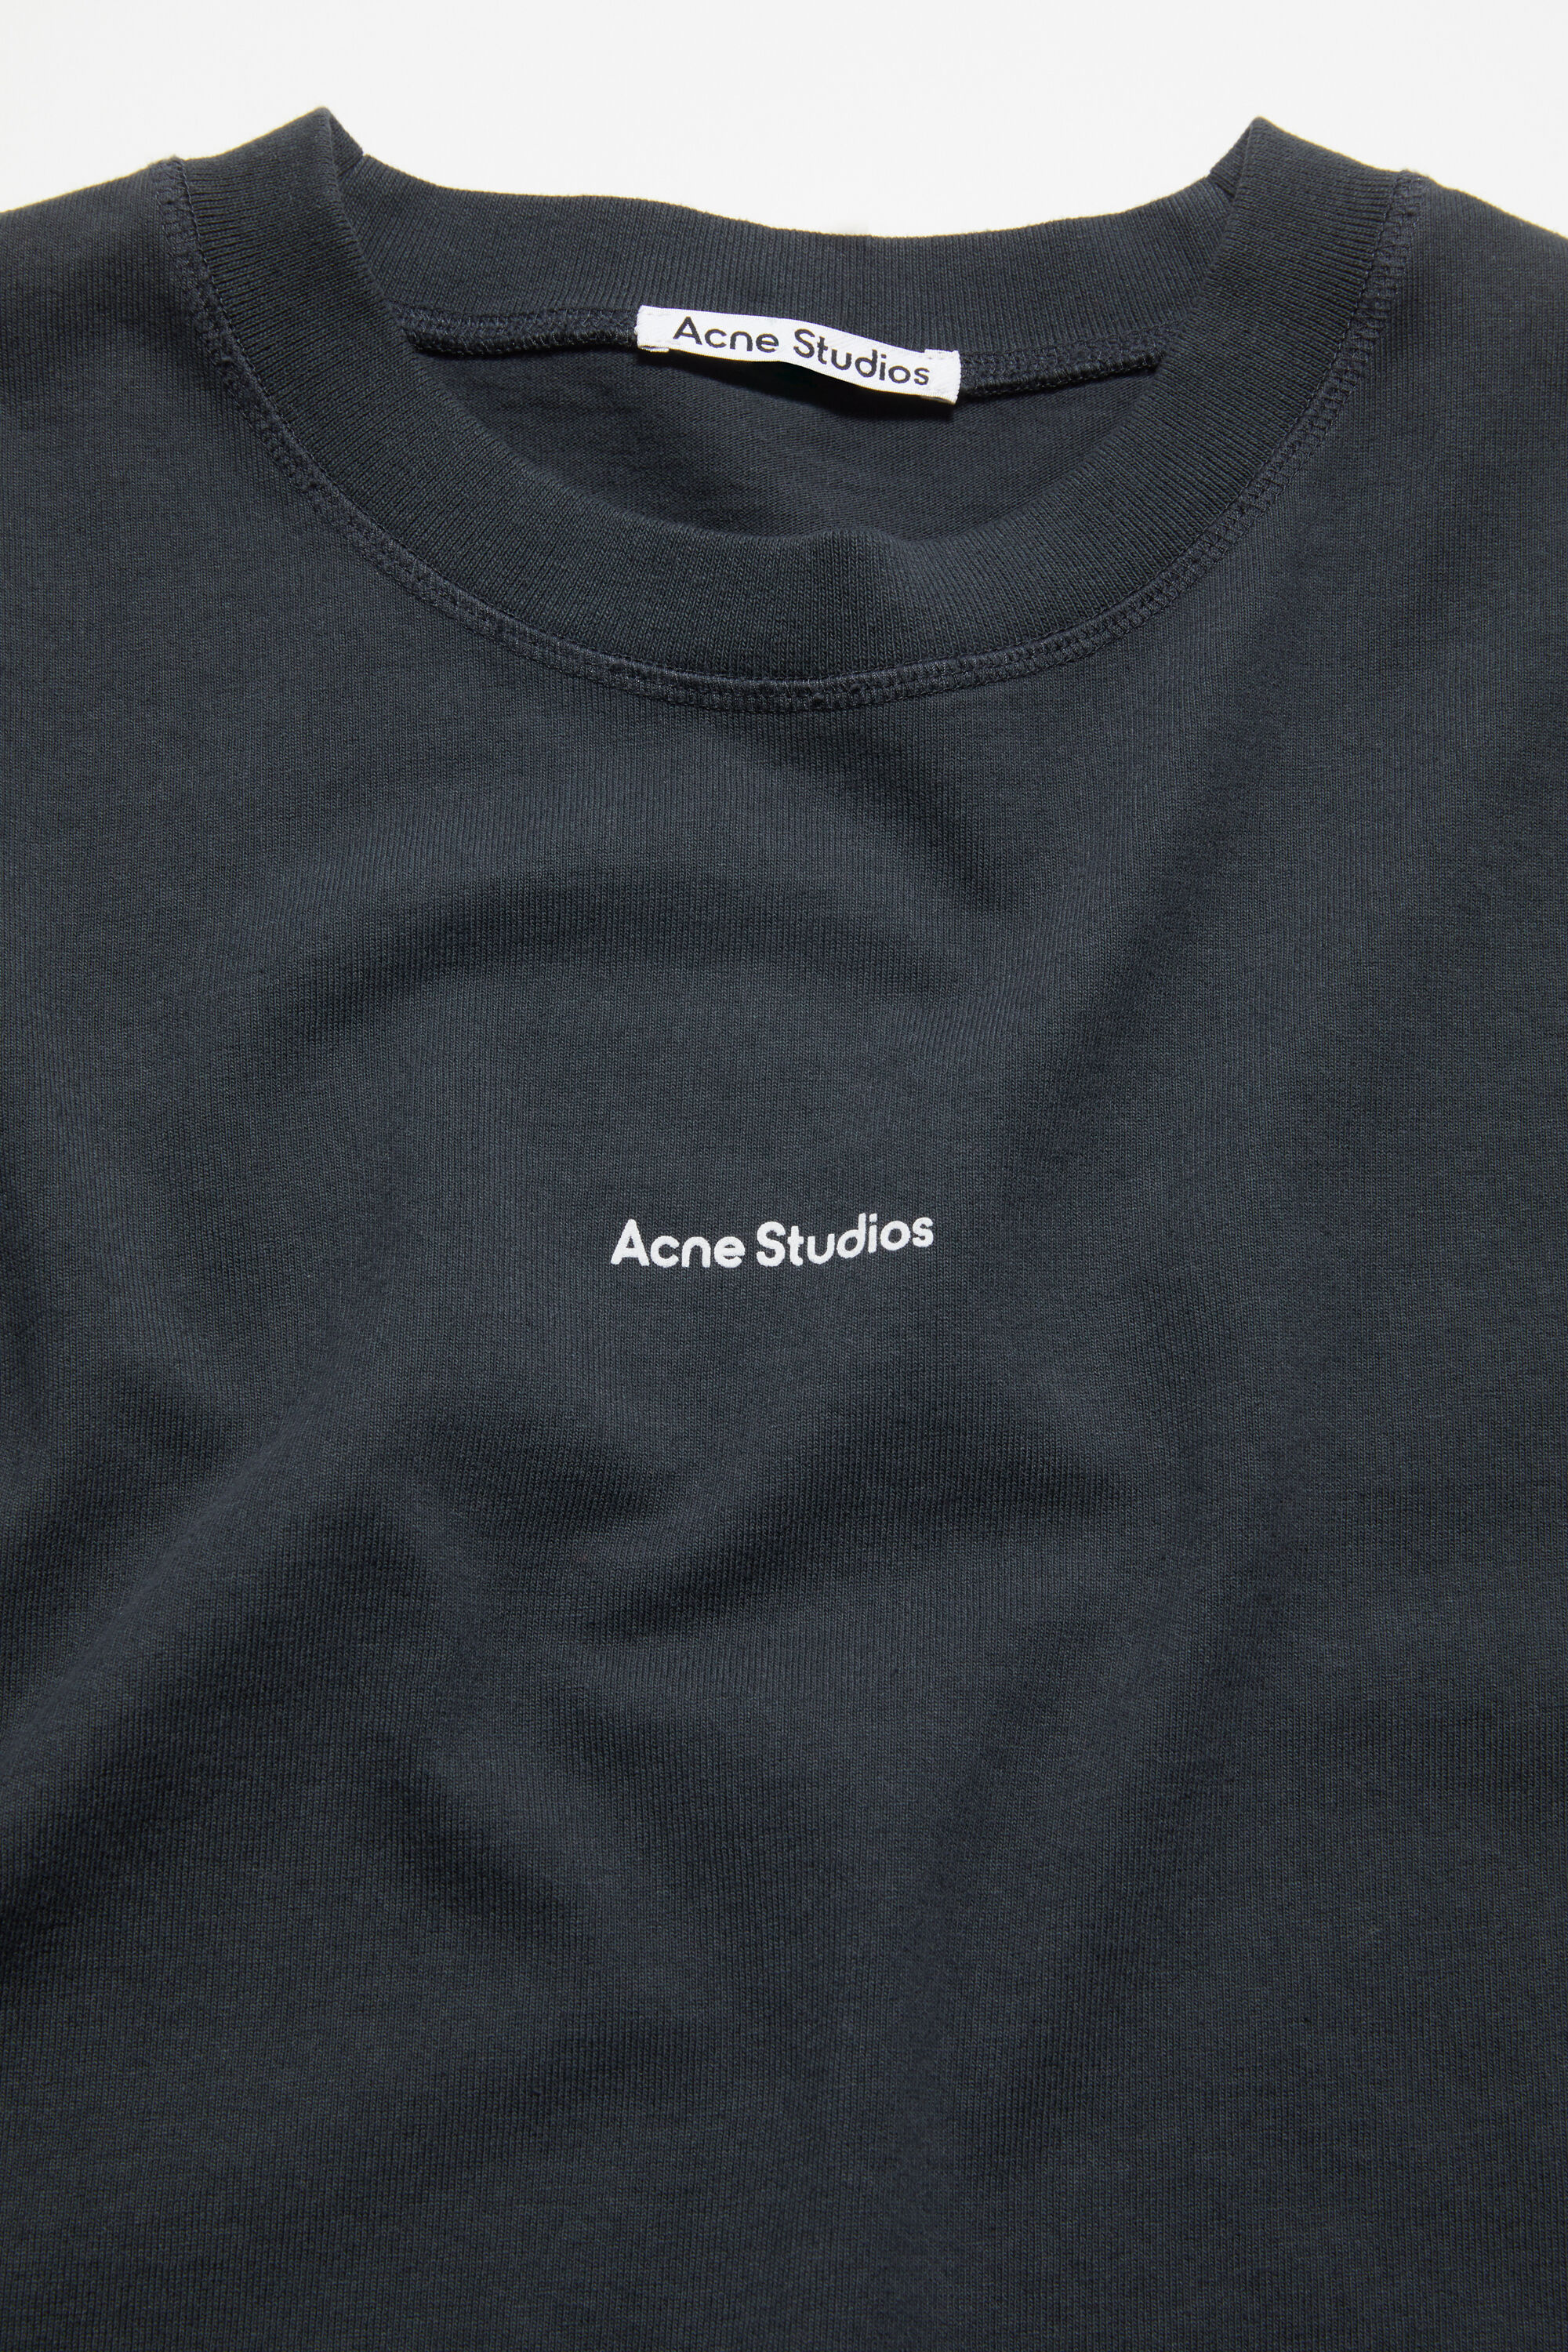 Acne Studios - Logo t-shirt - Black